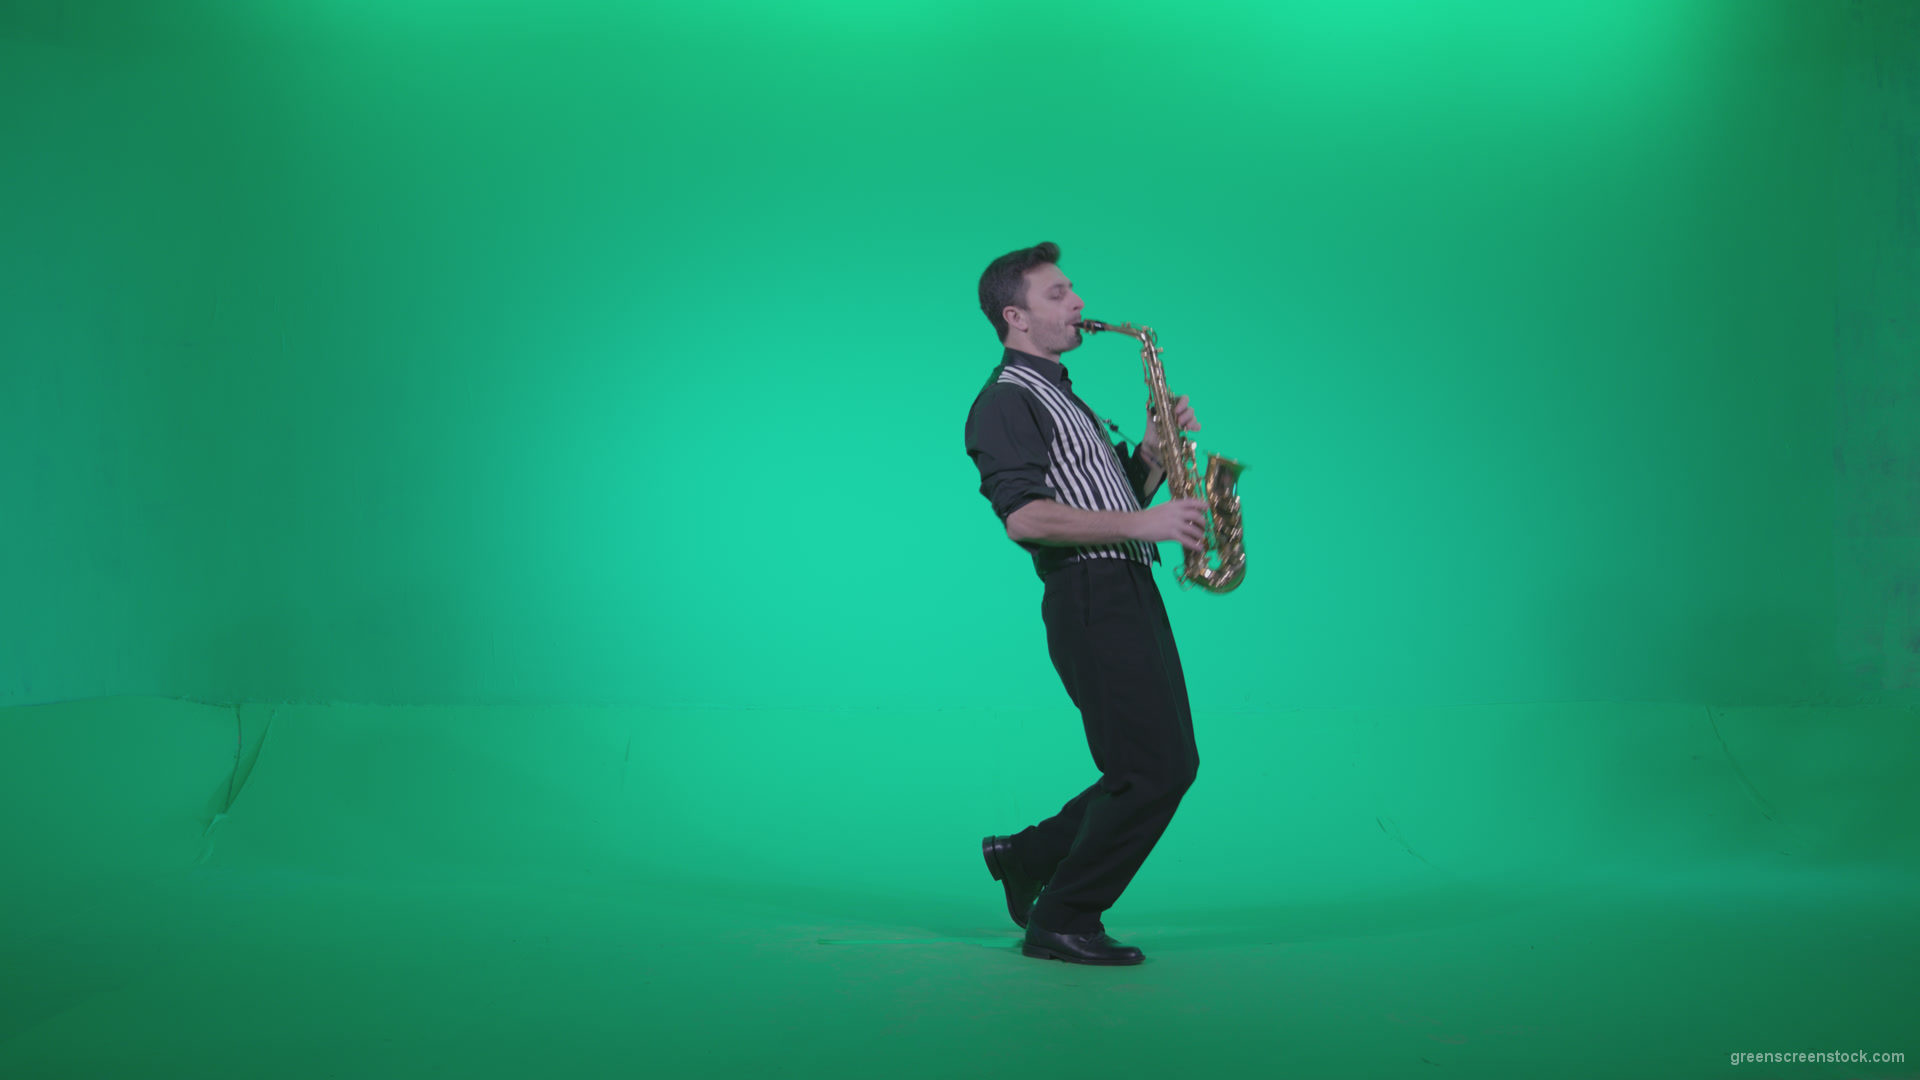 Saxophone-Virtuoso-Performer-s9-Green-Screen-Video-Footage_008 Green Screen Stock